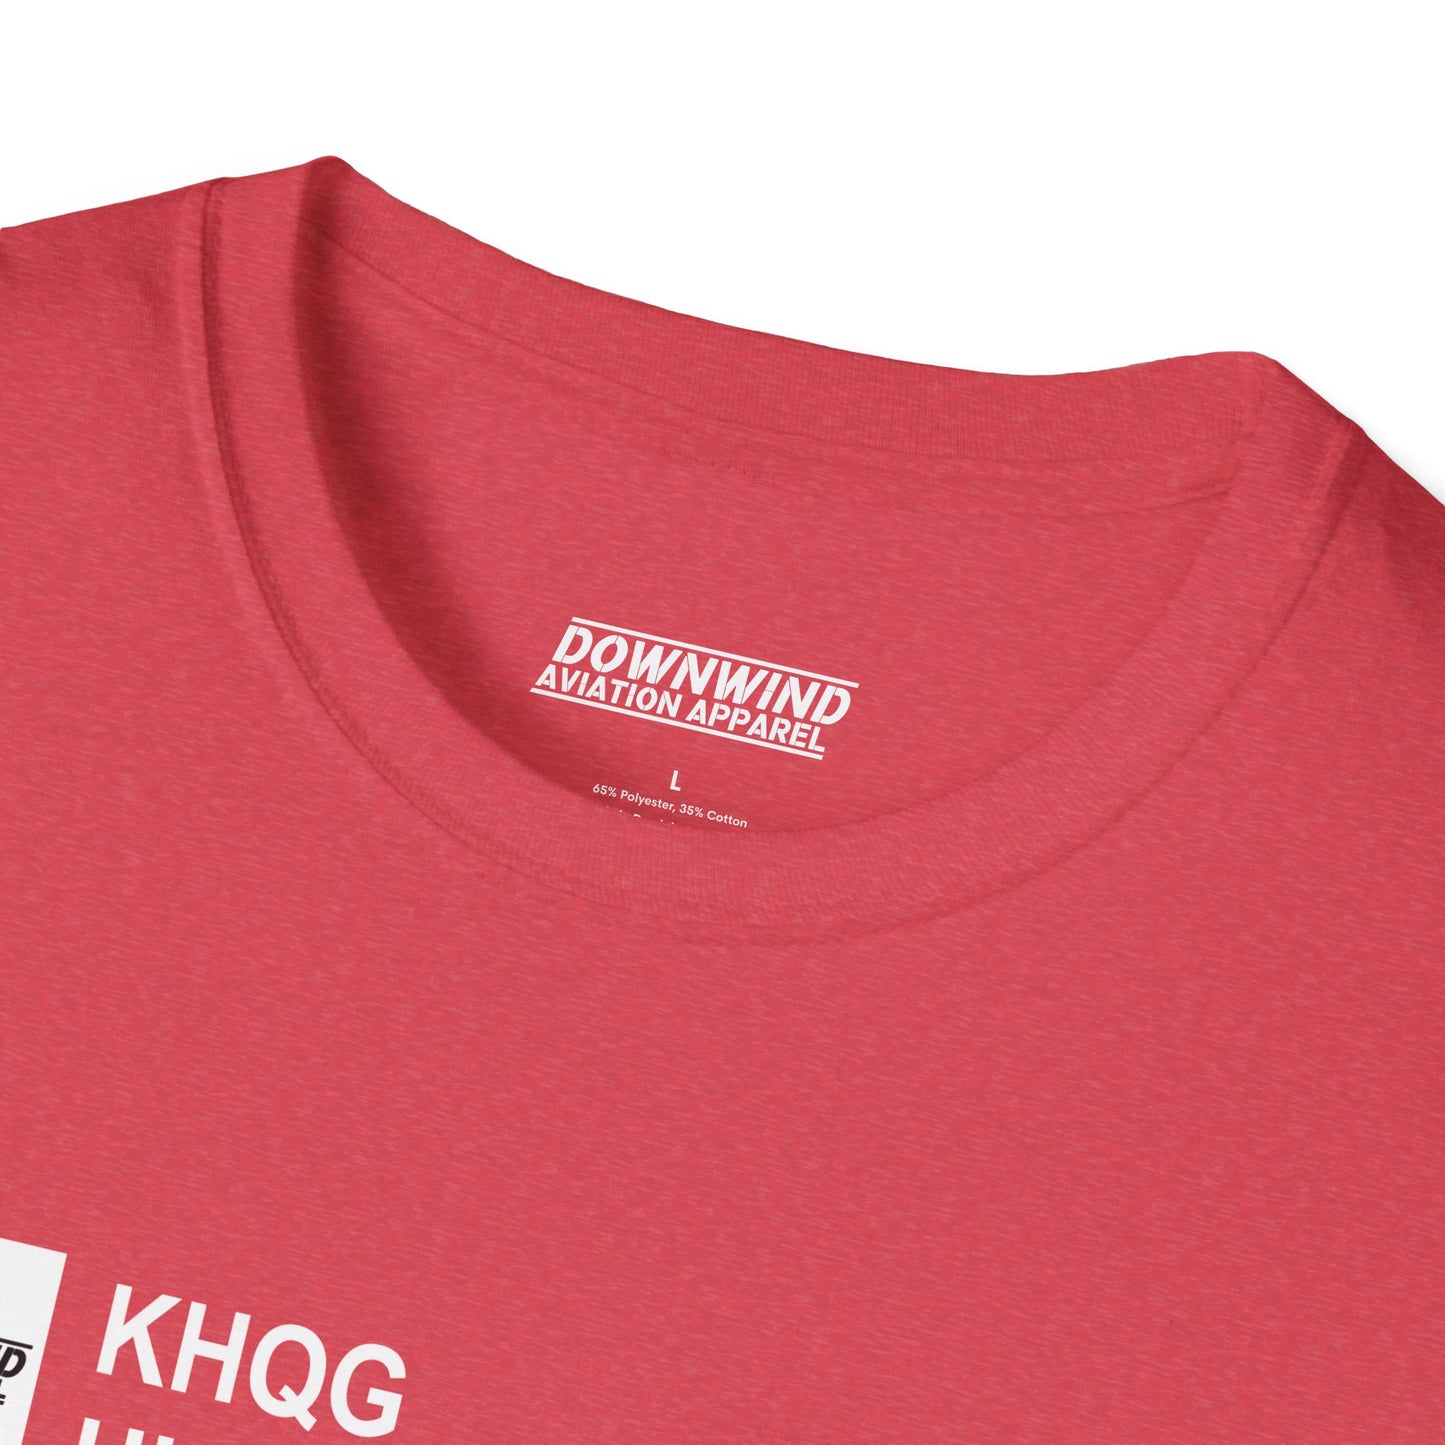 KHQG / Hugoton Muni. T-Shirt